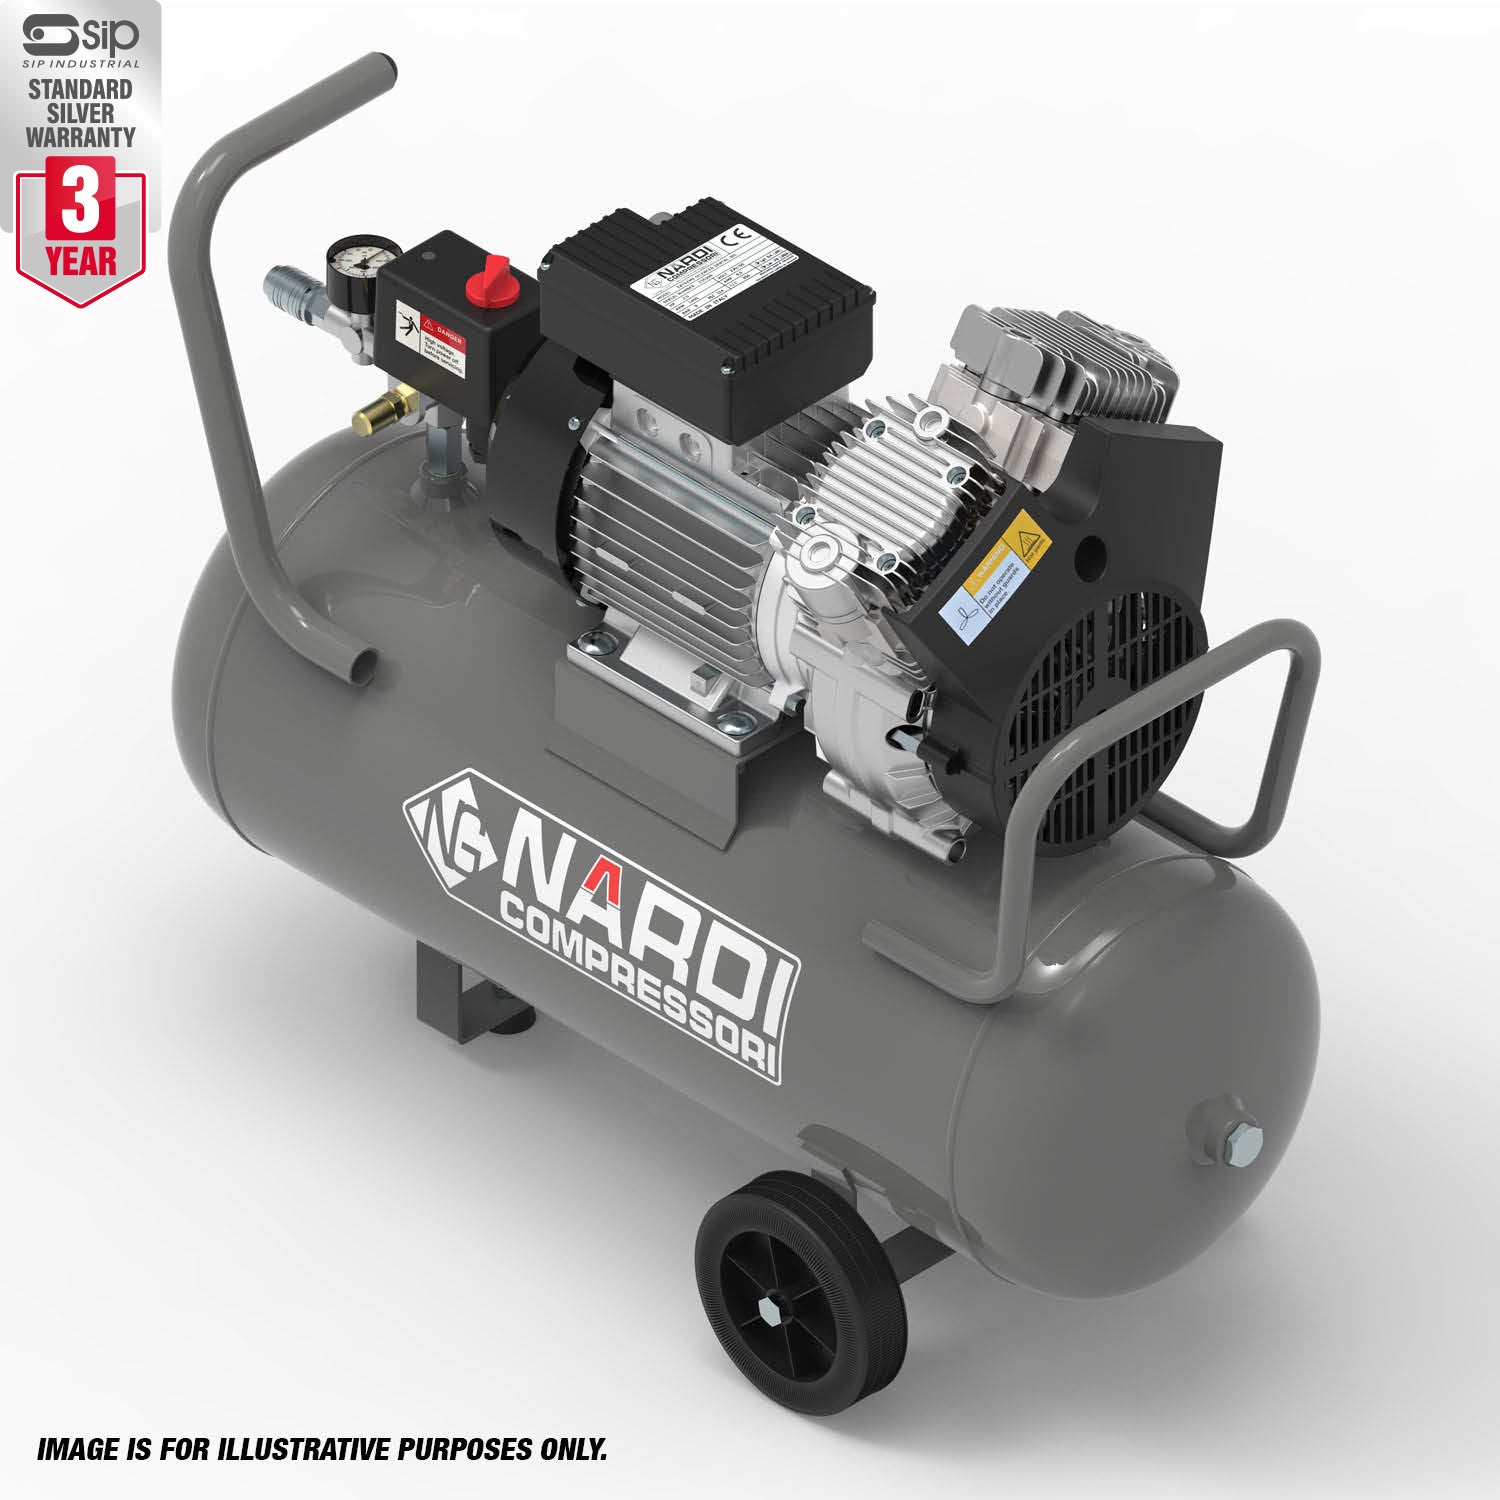 NARDI EXTREME 3 1.50HP 50ltr Compressor